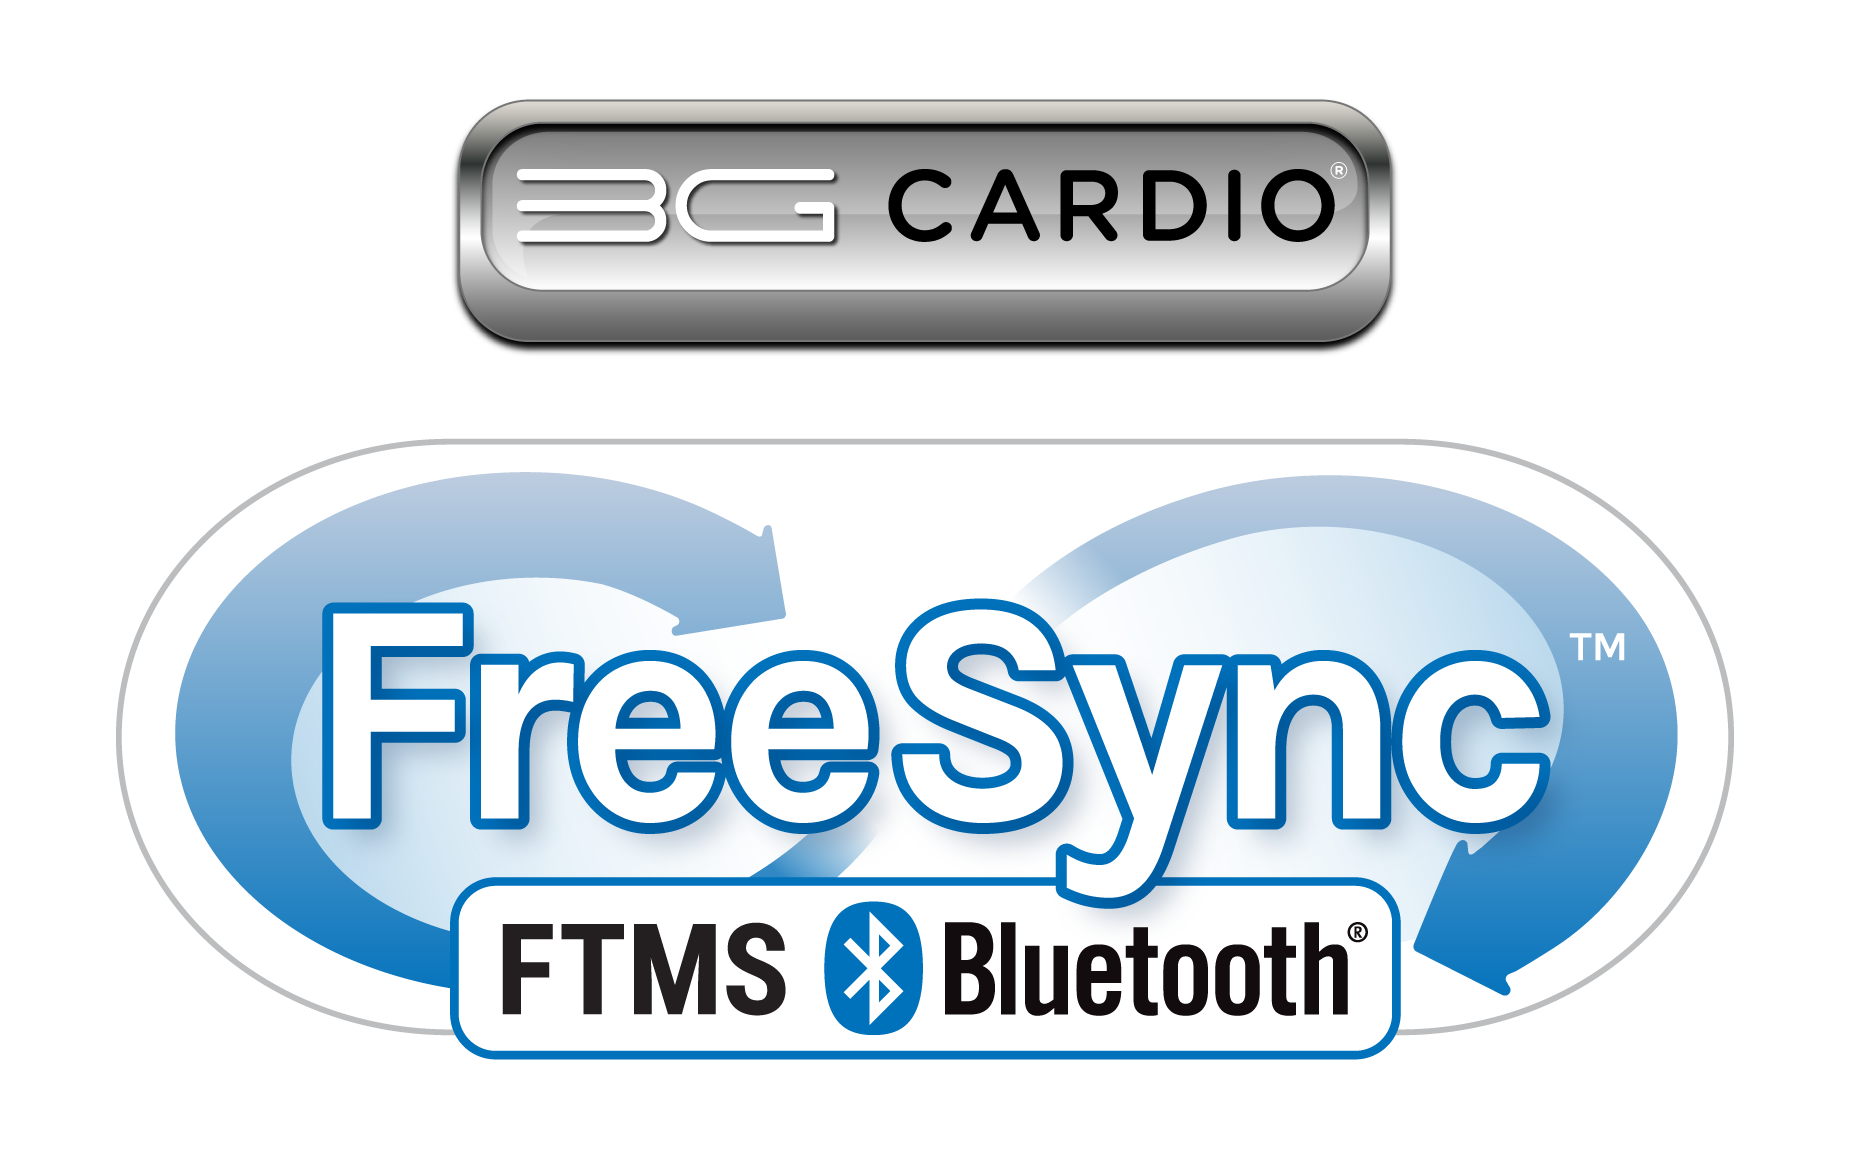 3G Cardio FreeSync™ with FTMS Bluetooth®